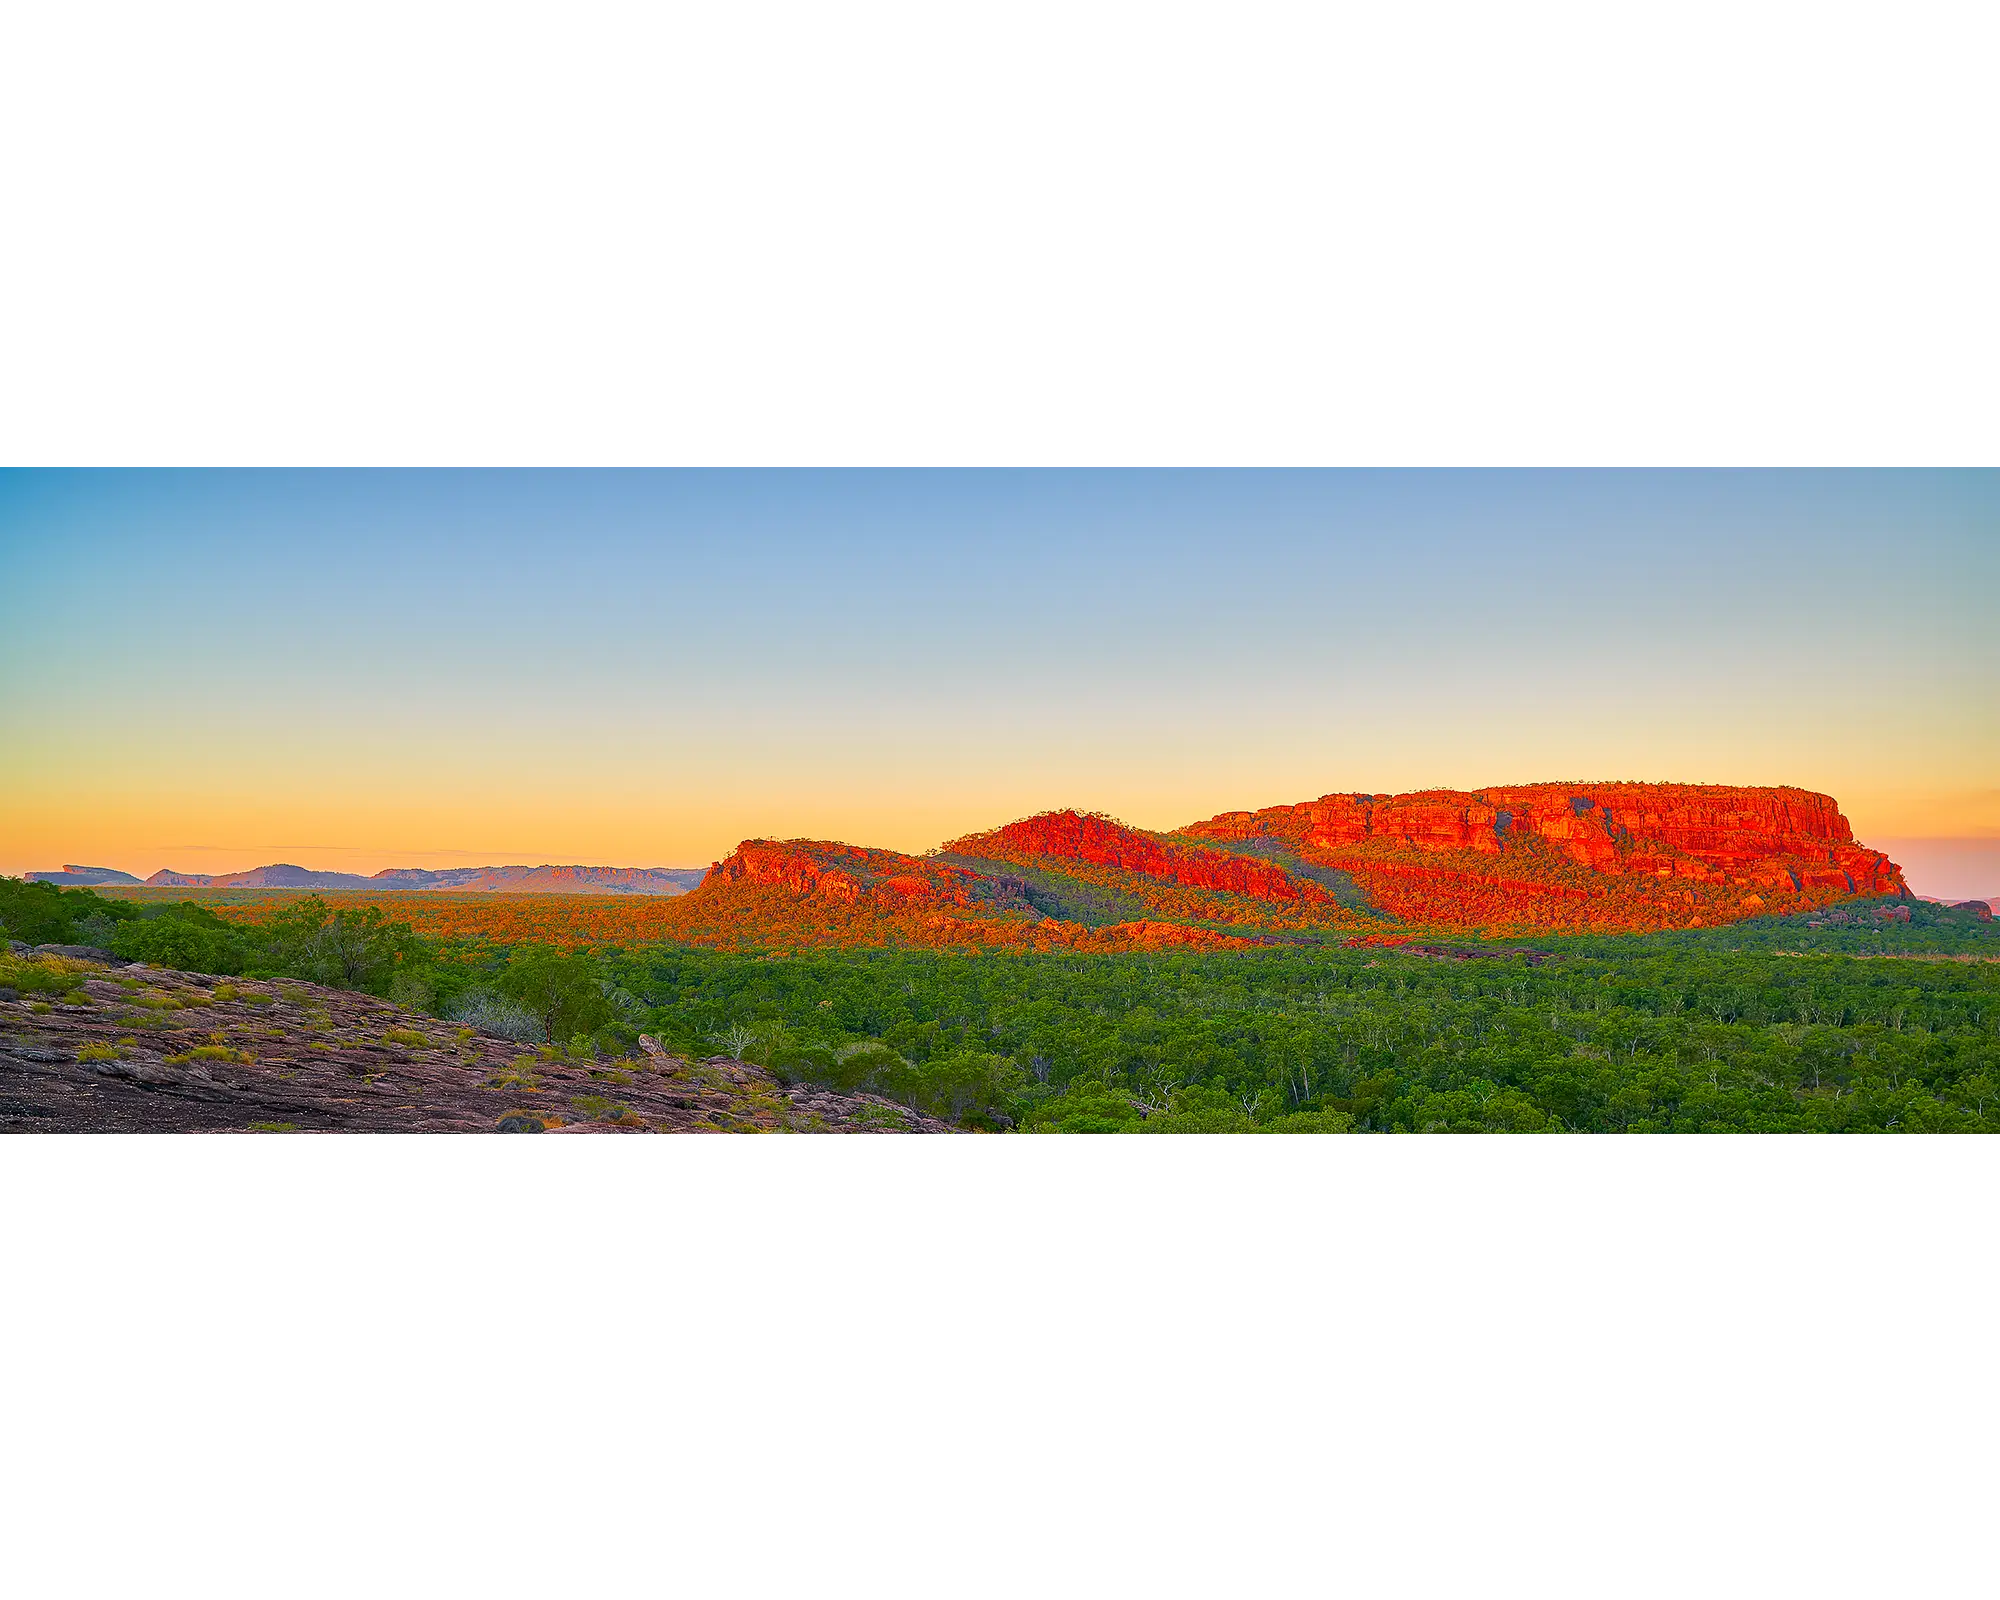 Heart Of Kakadu. Nourlangie Rock, Kakadu National Park, Northern Territory, Australia.